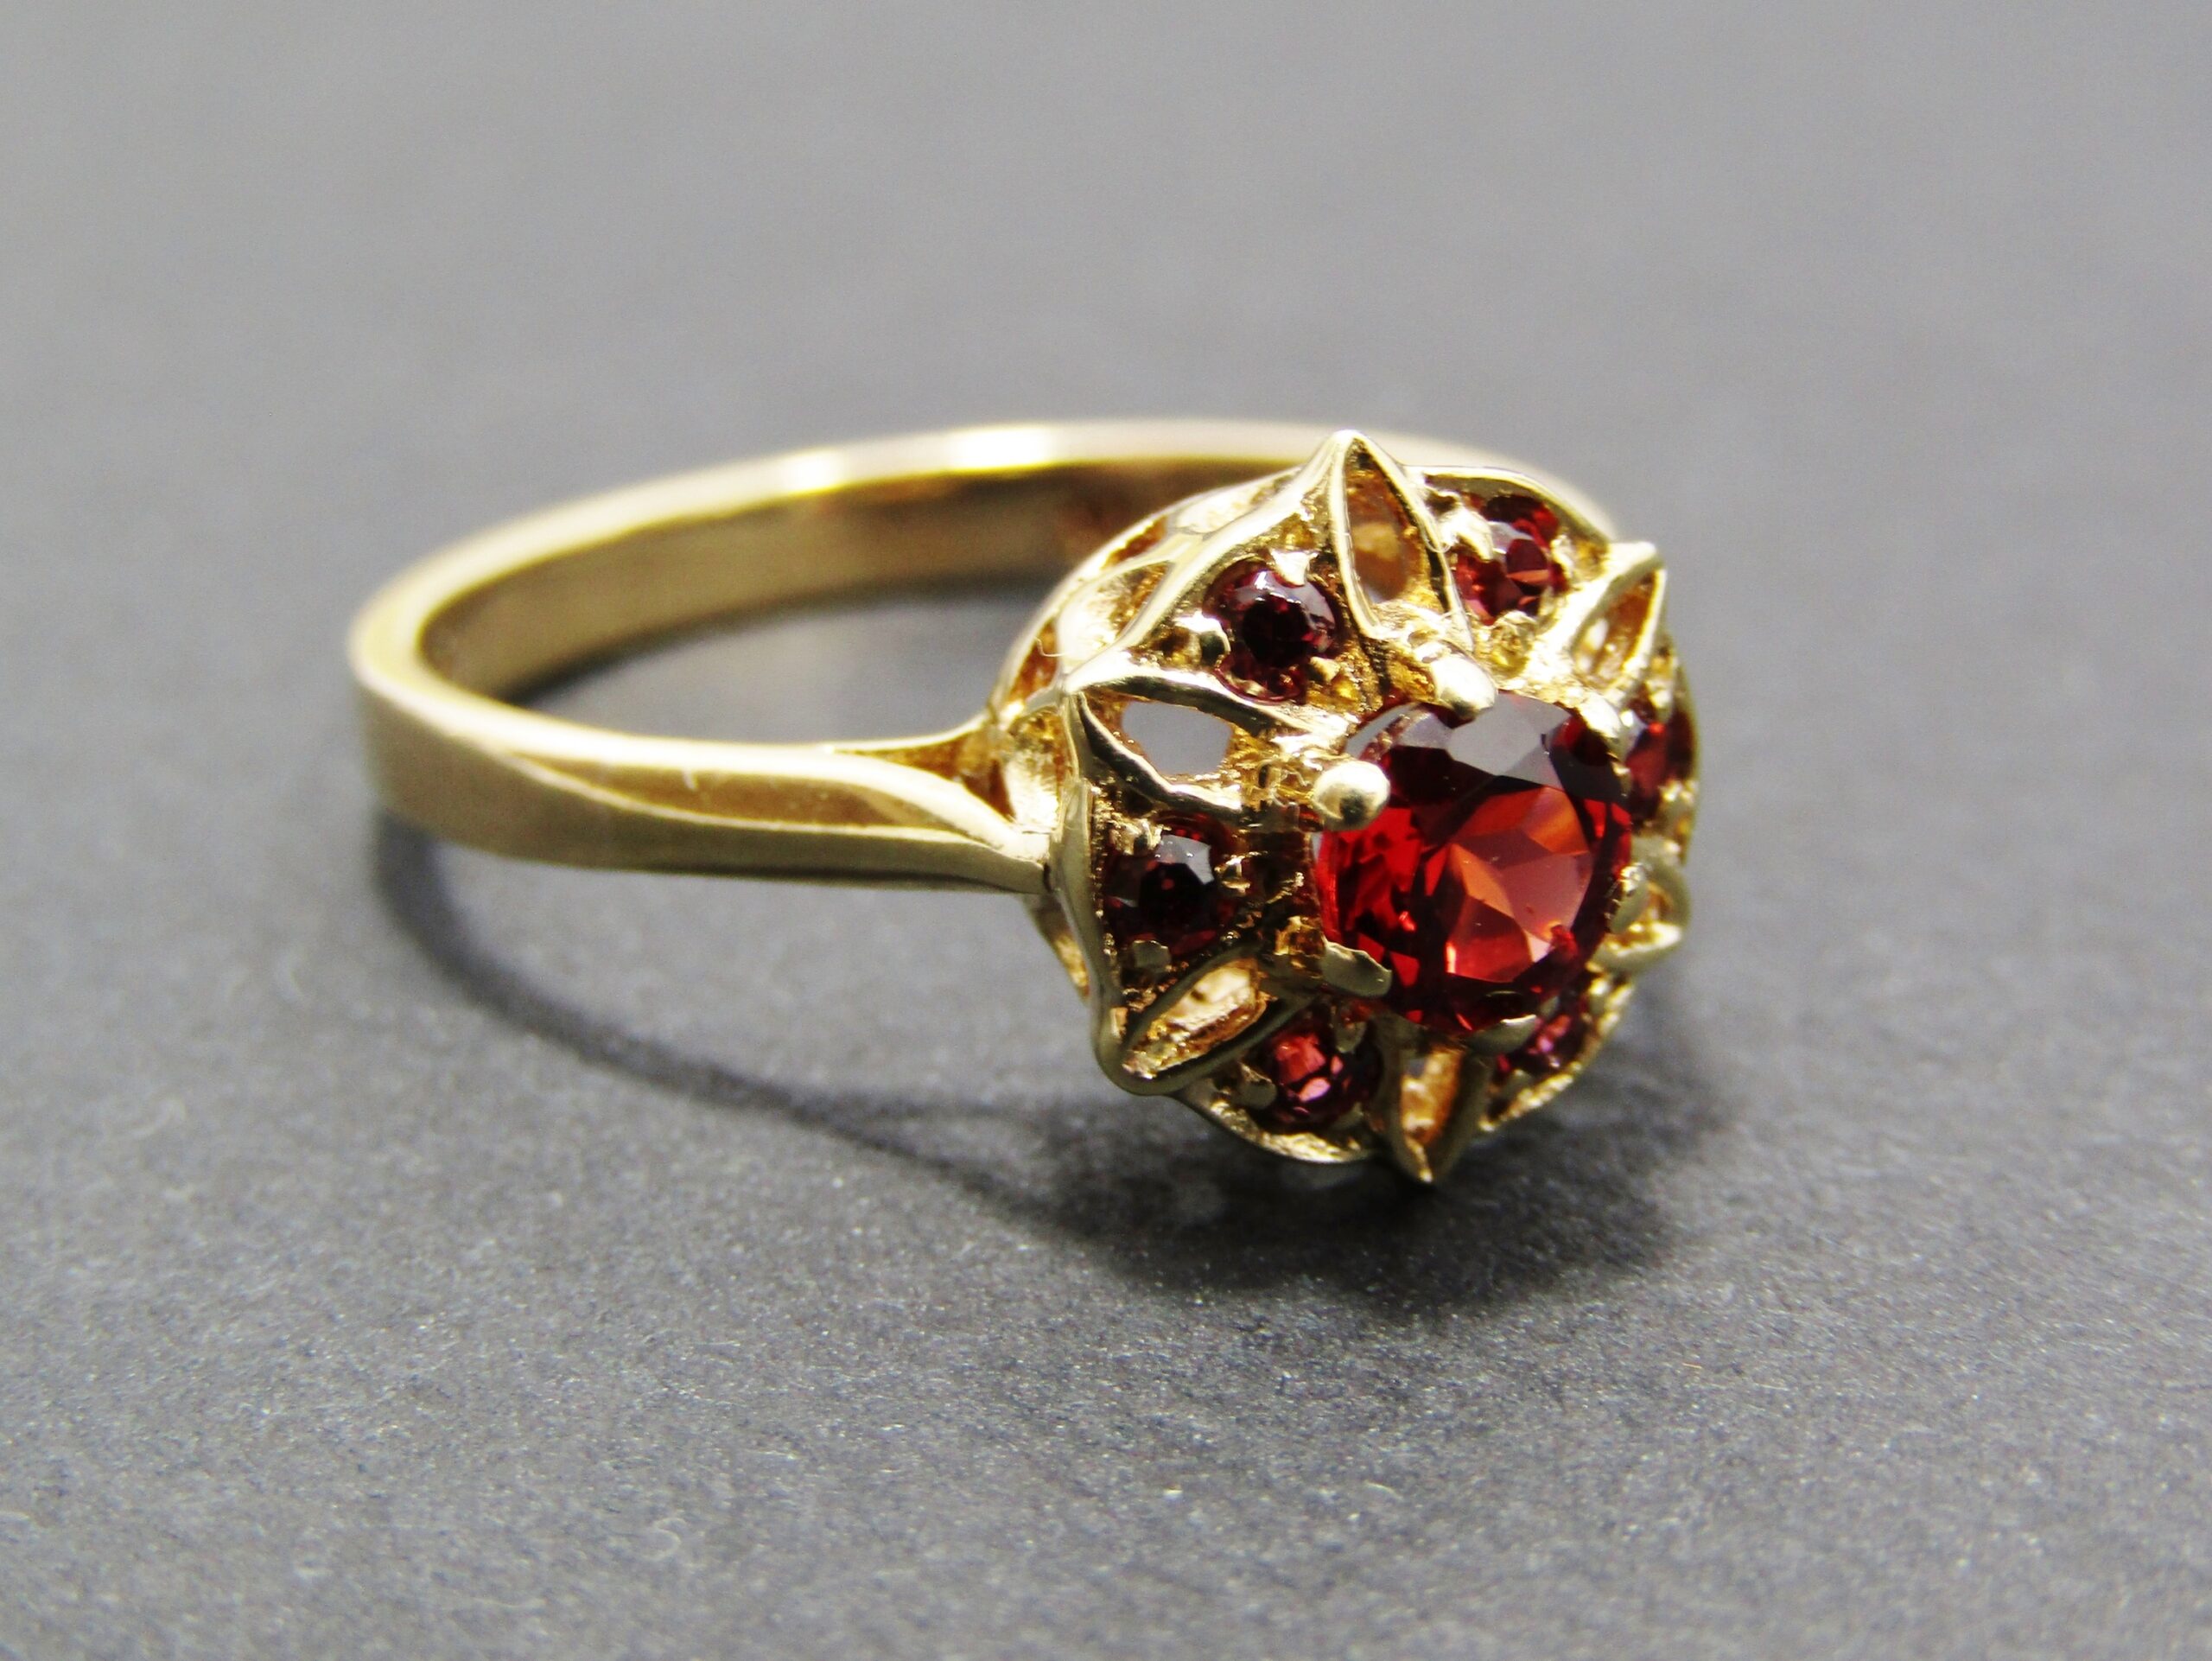 A Gorgeous Vintage Deign Garnet Ring in 9ct Gold